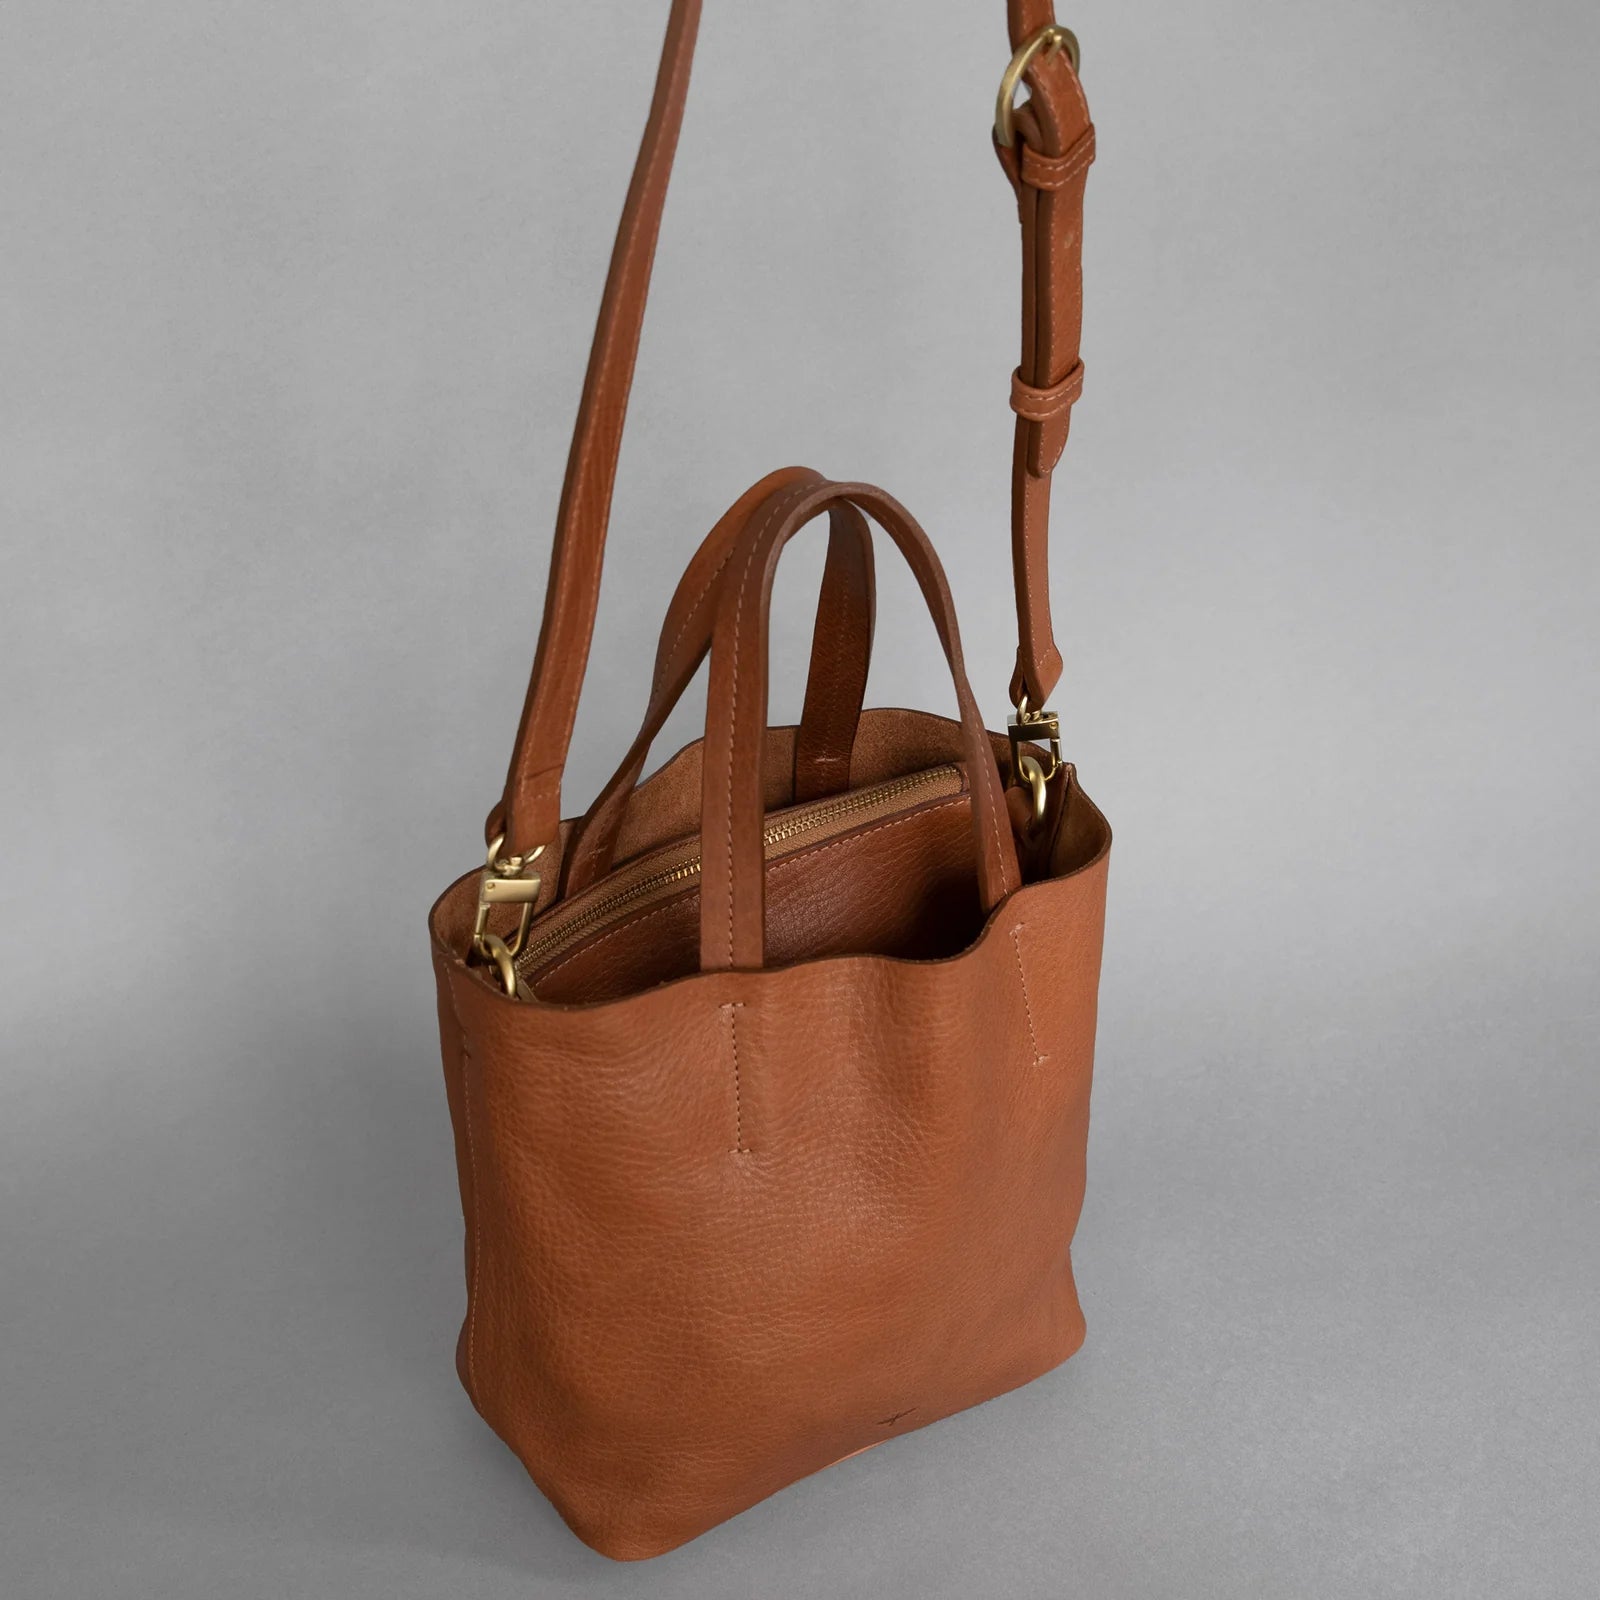 CLHEI - Lani Leather Handbag